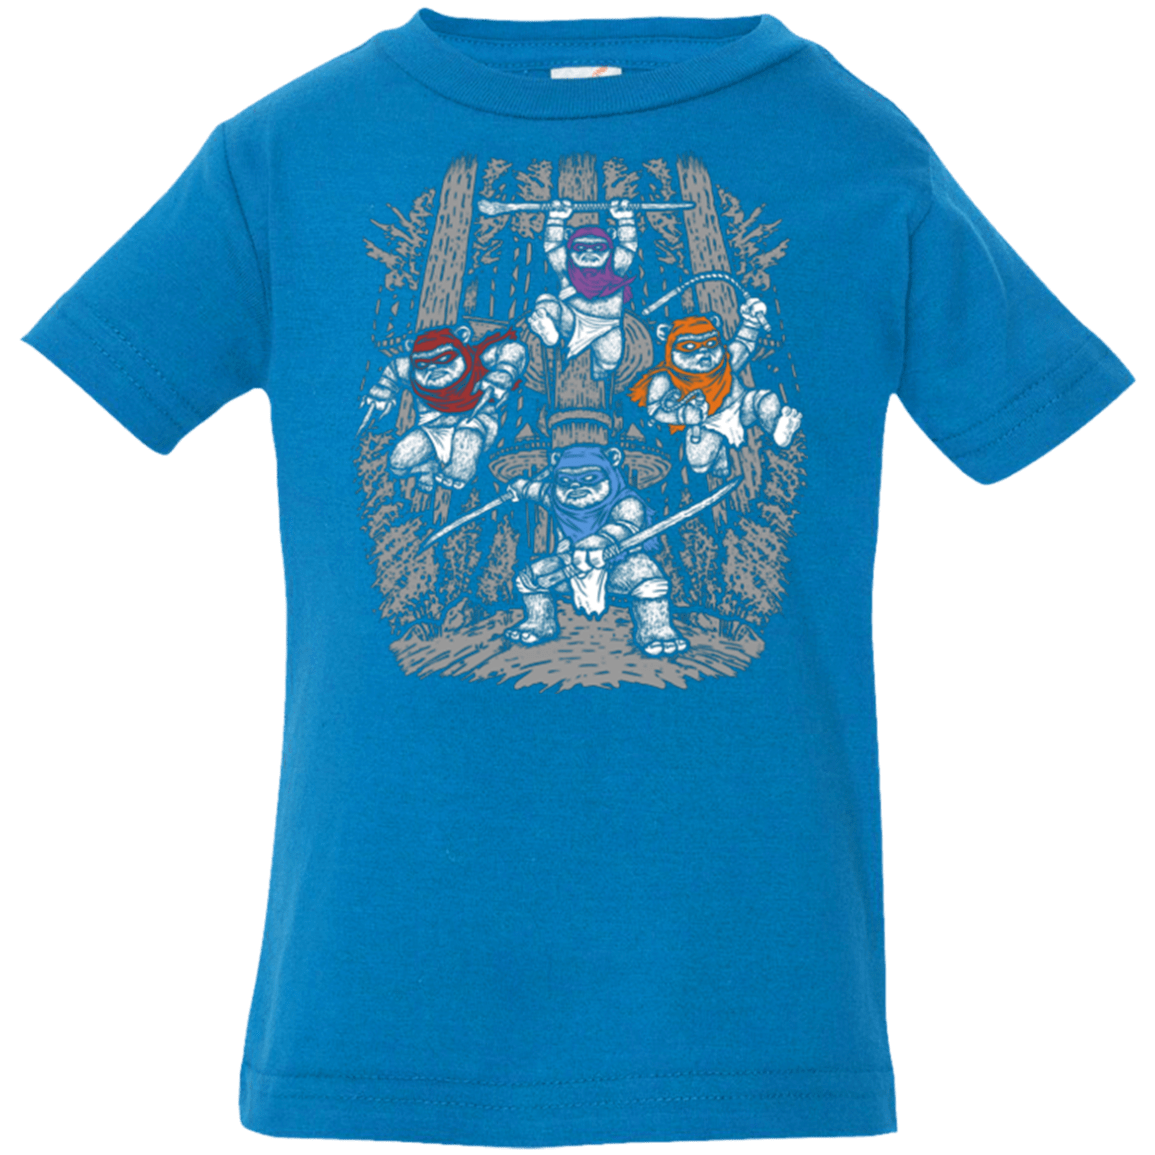 The Ninja Savages Infant Premium T-Shirt